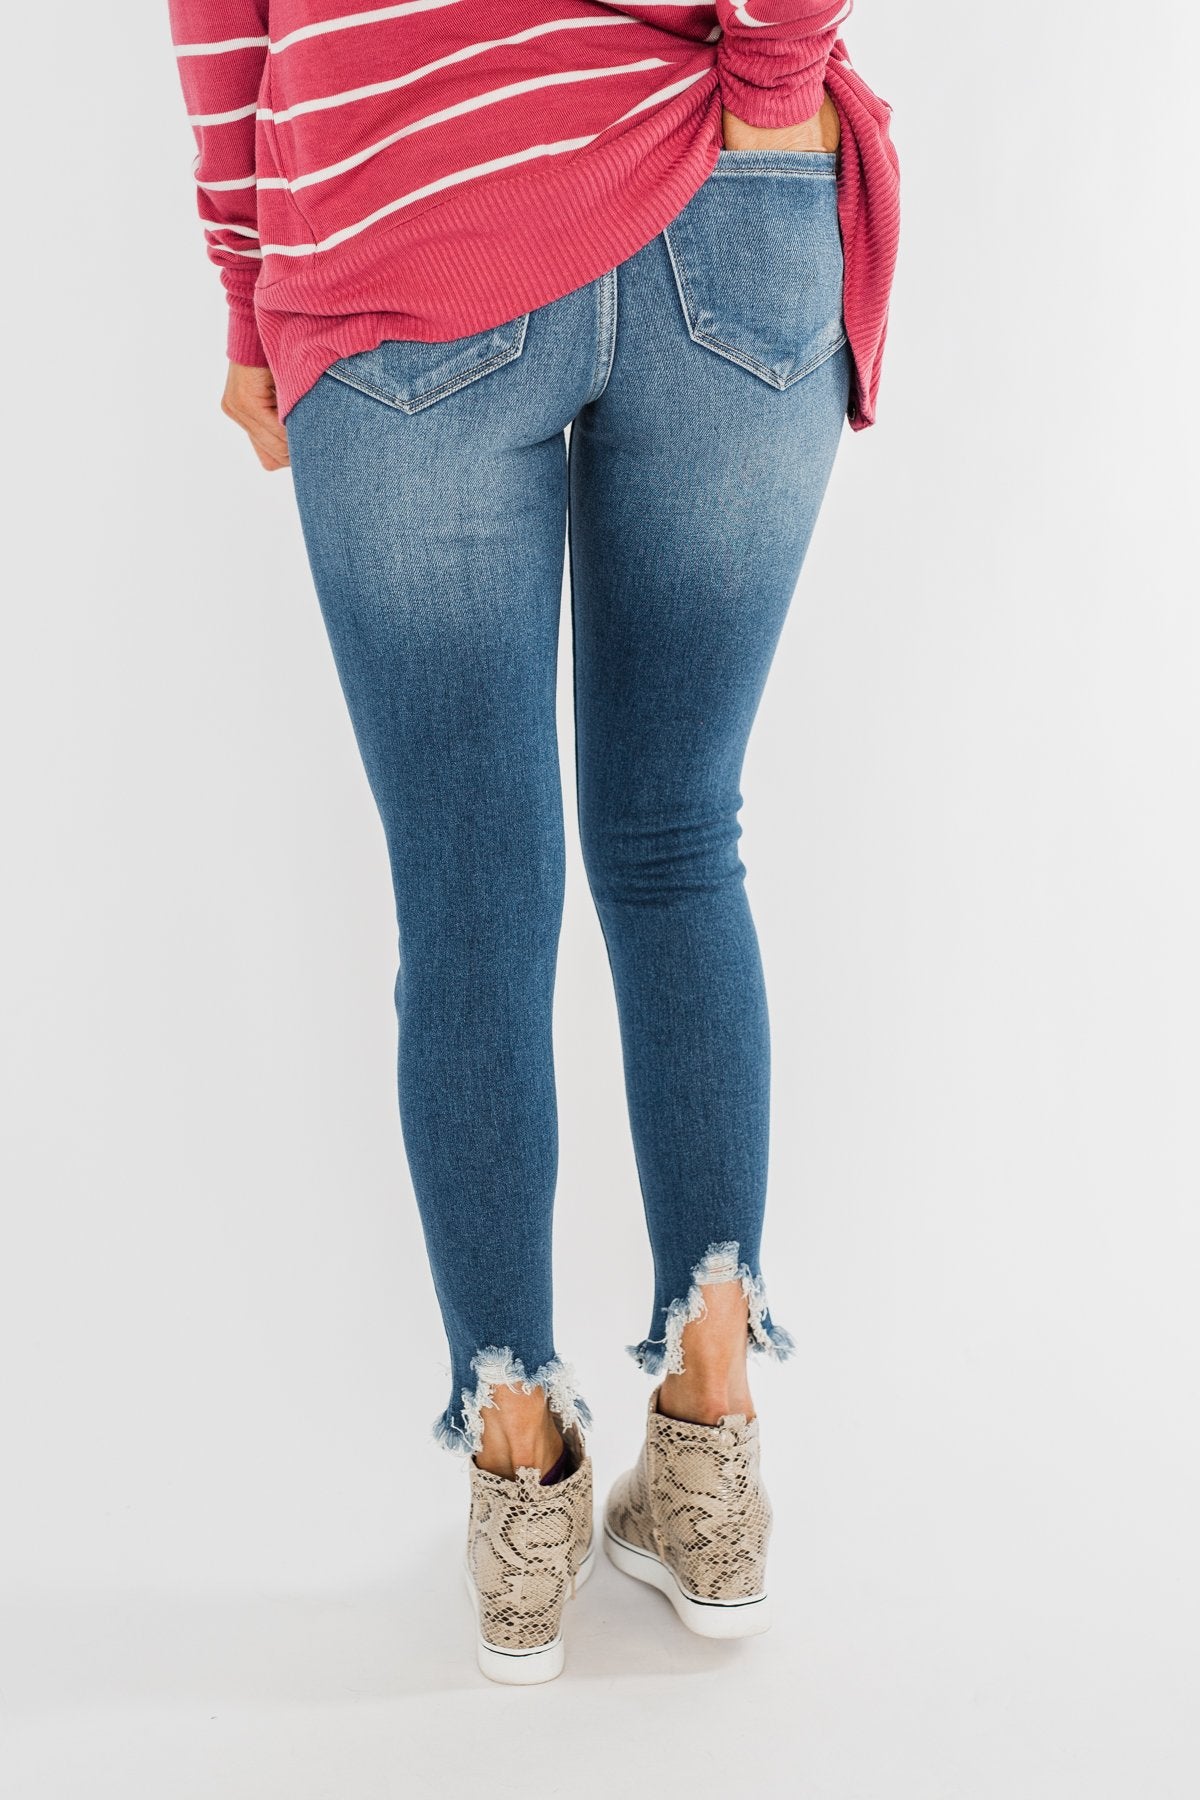 KanCan Skinny Jeans- Eileen Wash